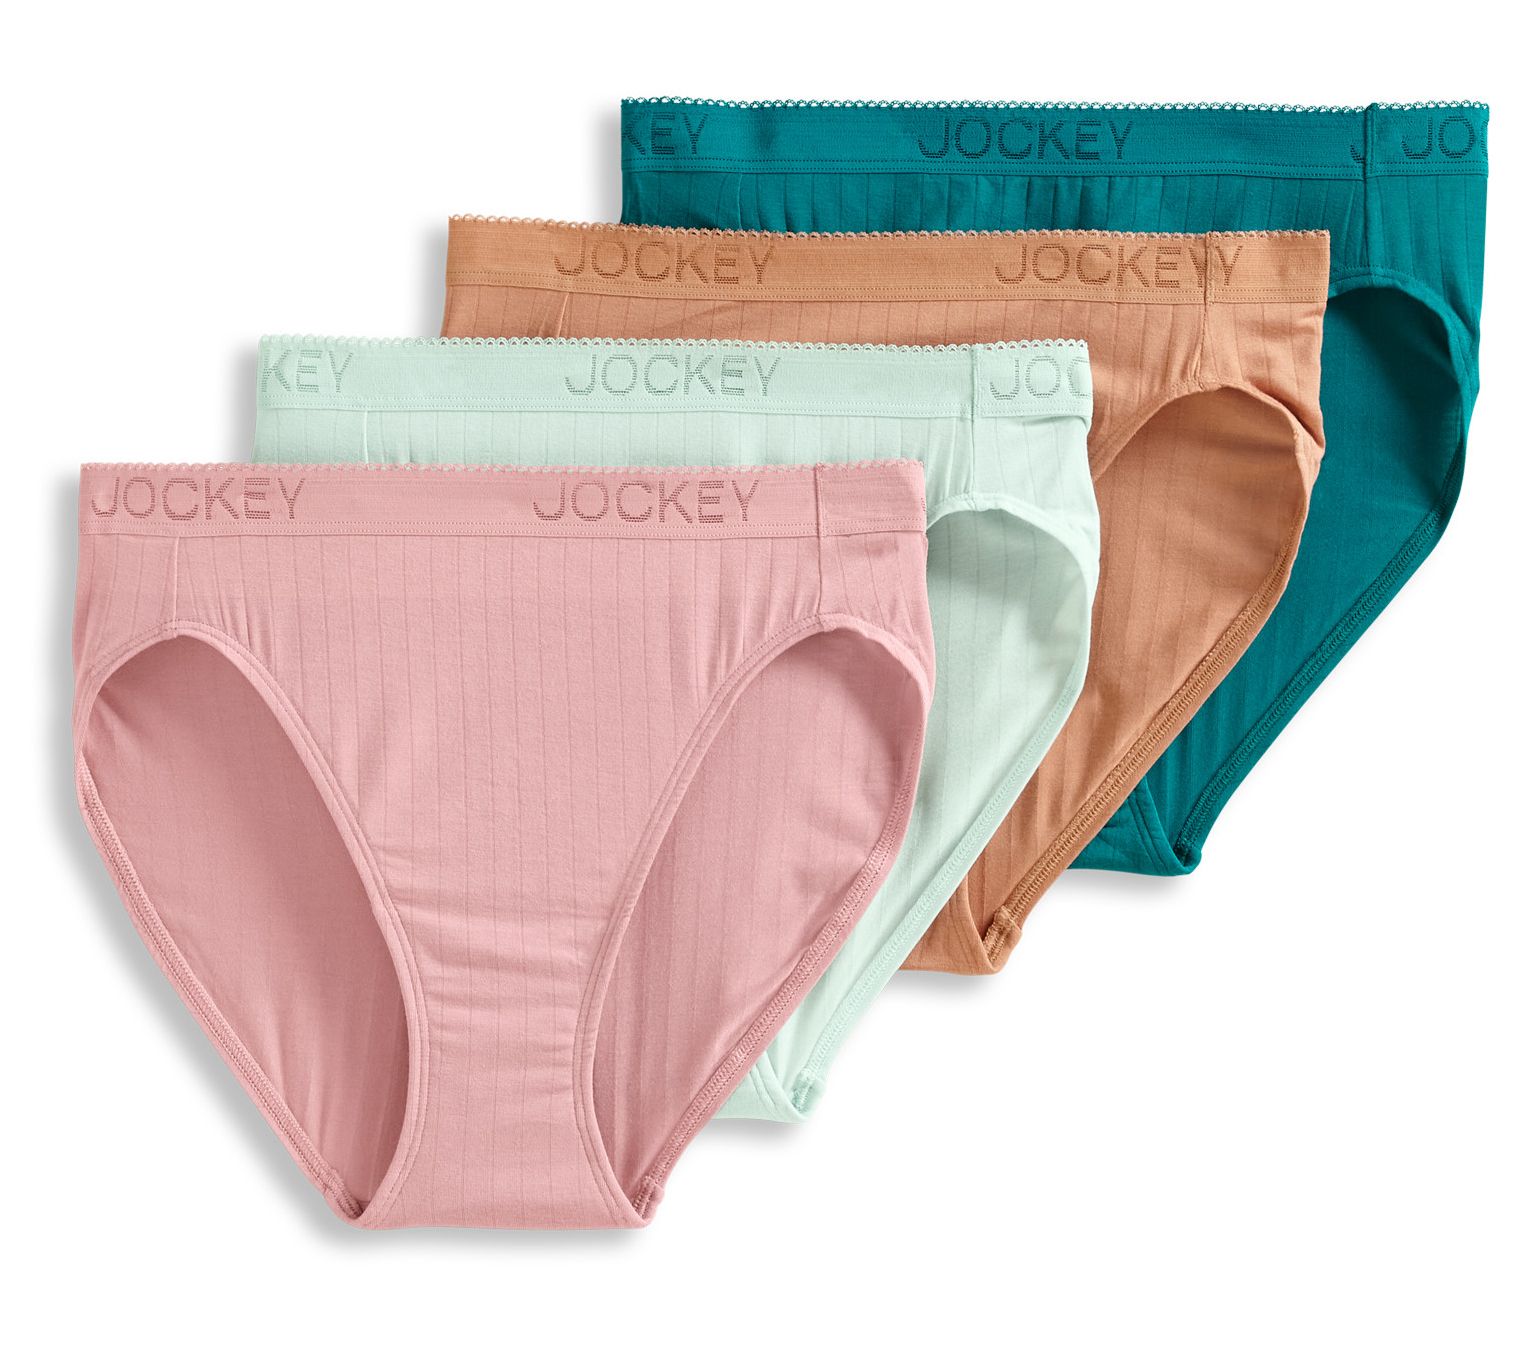 Jockey Underwear Photos and Images